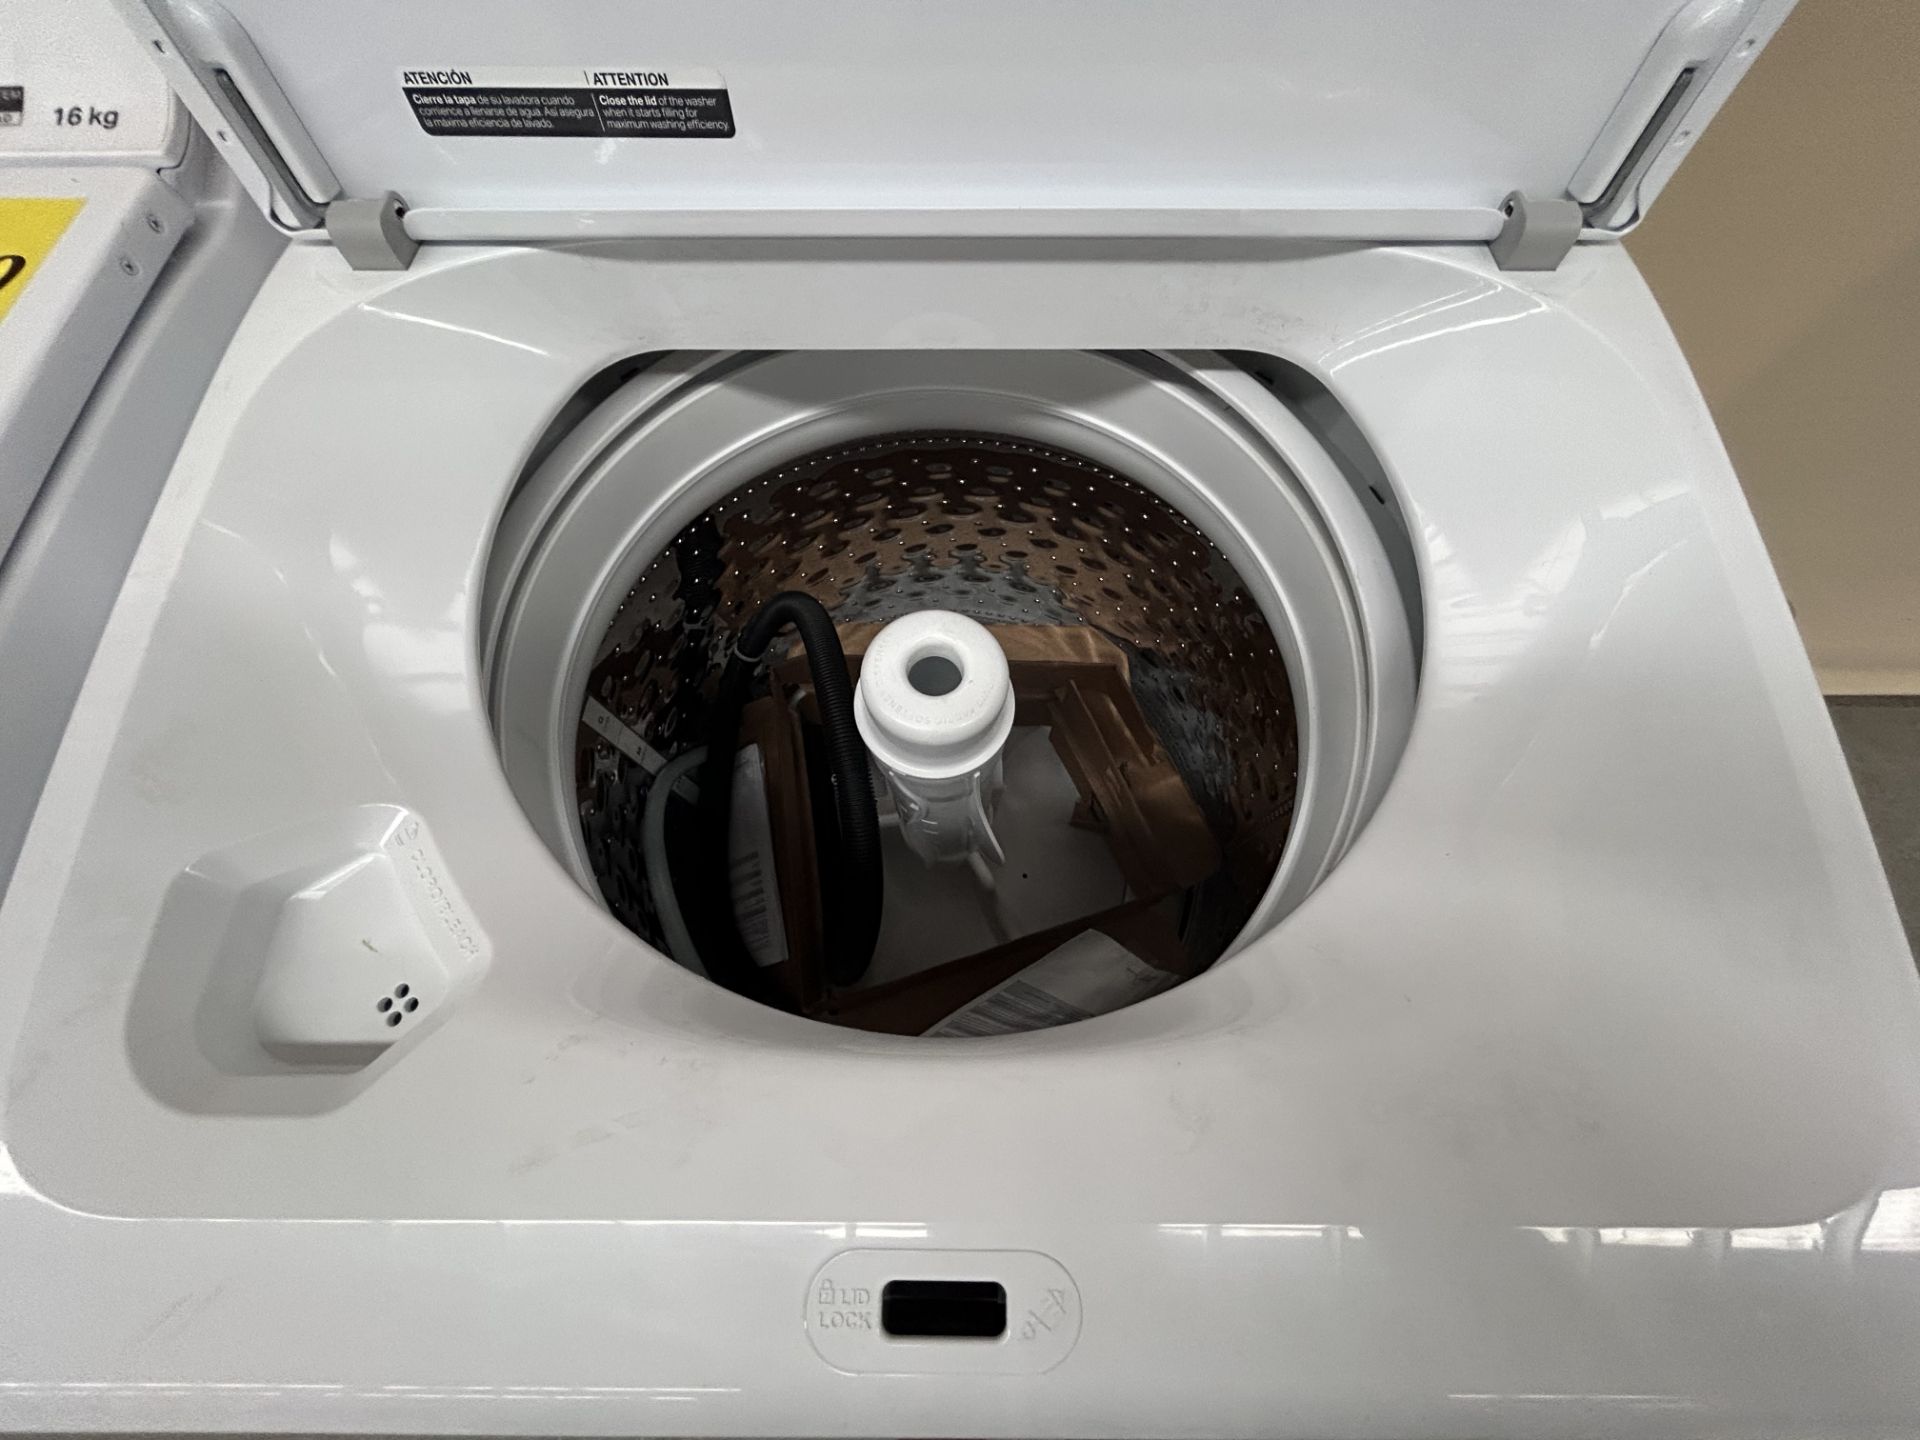 Lote de 2 lavadoras contiene: 1 Lavadora de 16 KG Marca WHIRPOOL, Modelo 8MWTW1612MJQ1, Serie 79459 - Image 5 of 7